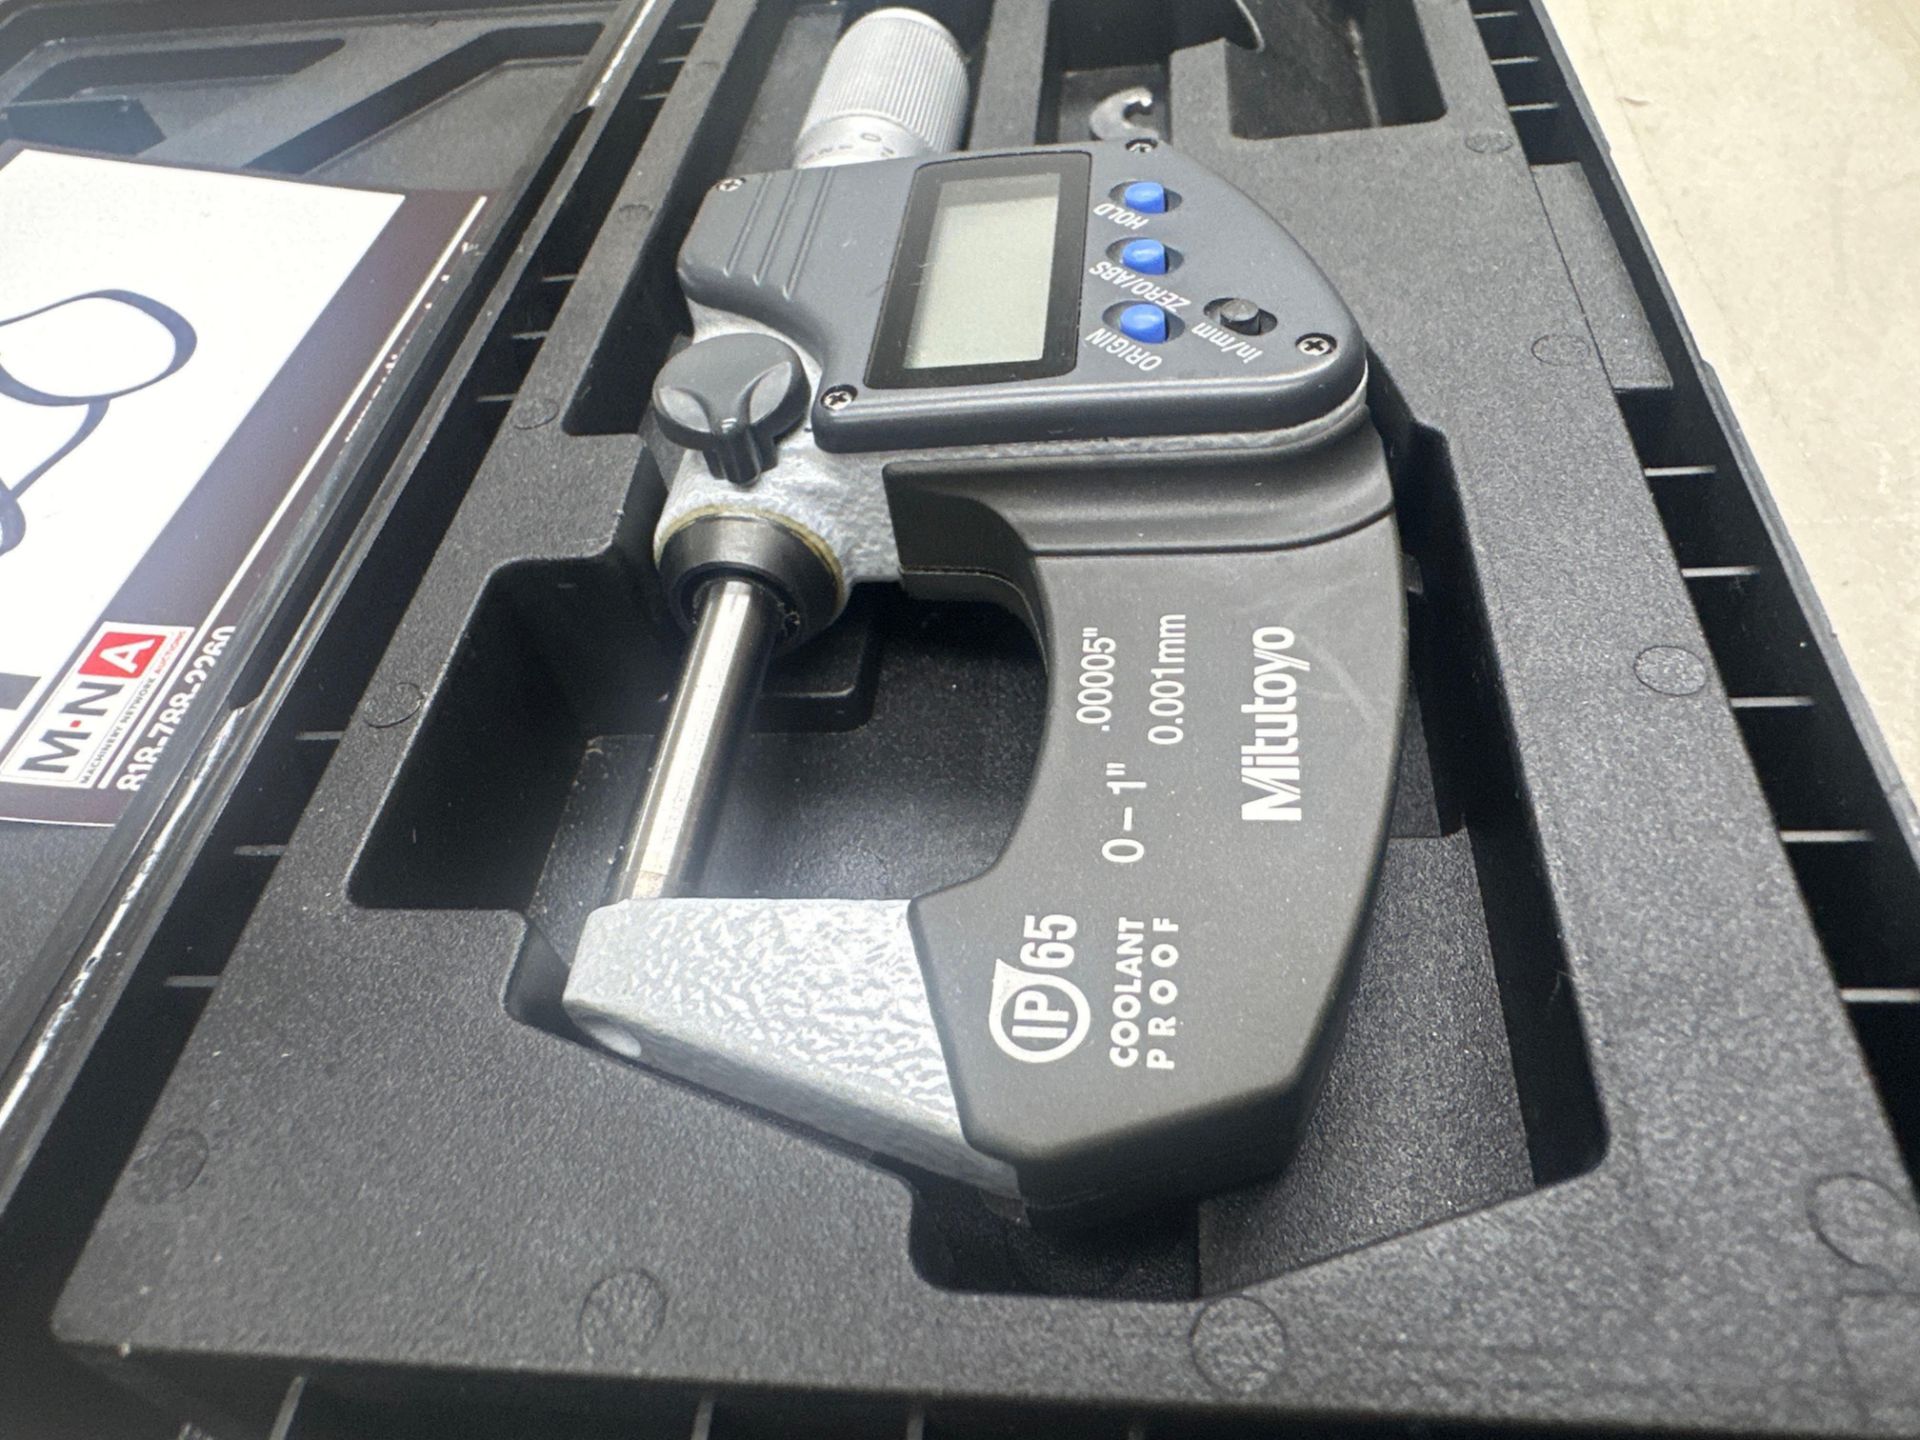 0 - 1” Mitutoyo Digital Micrometer - Image 2 of 3